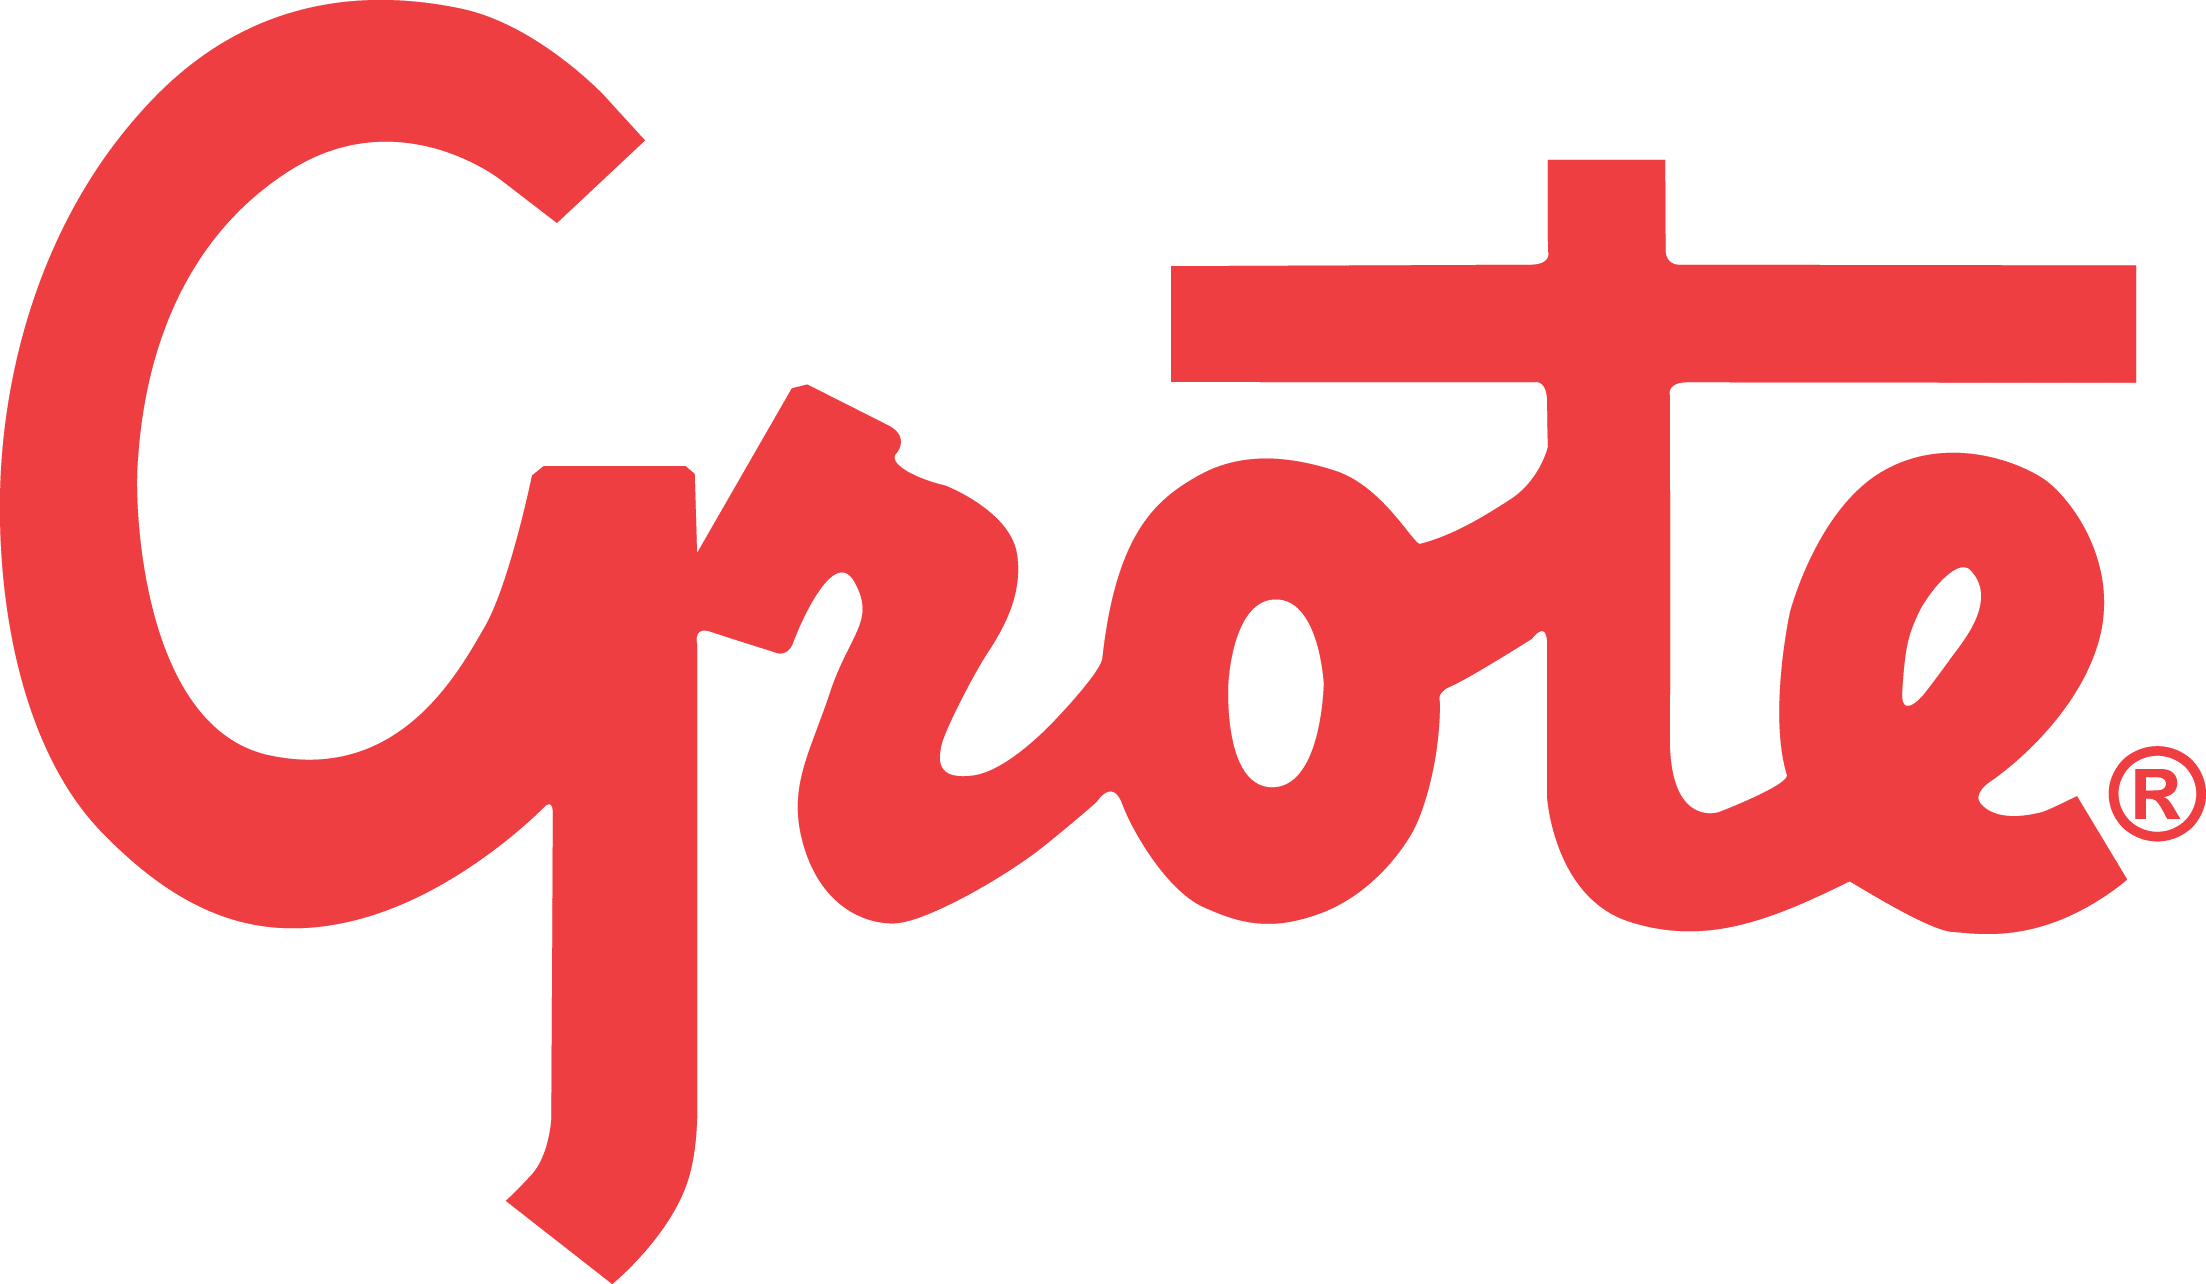 Grote logo 